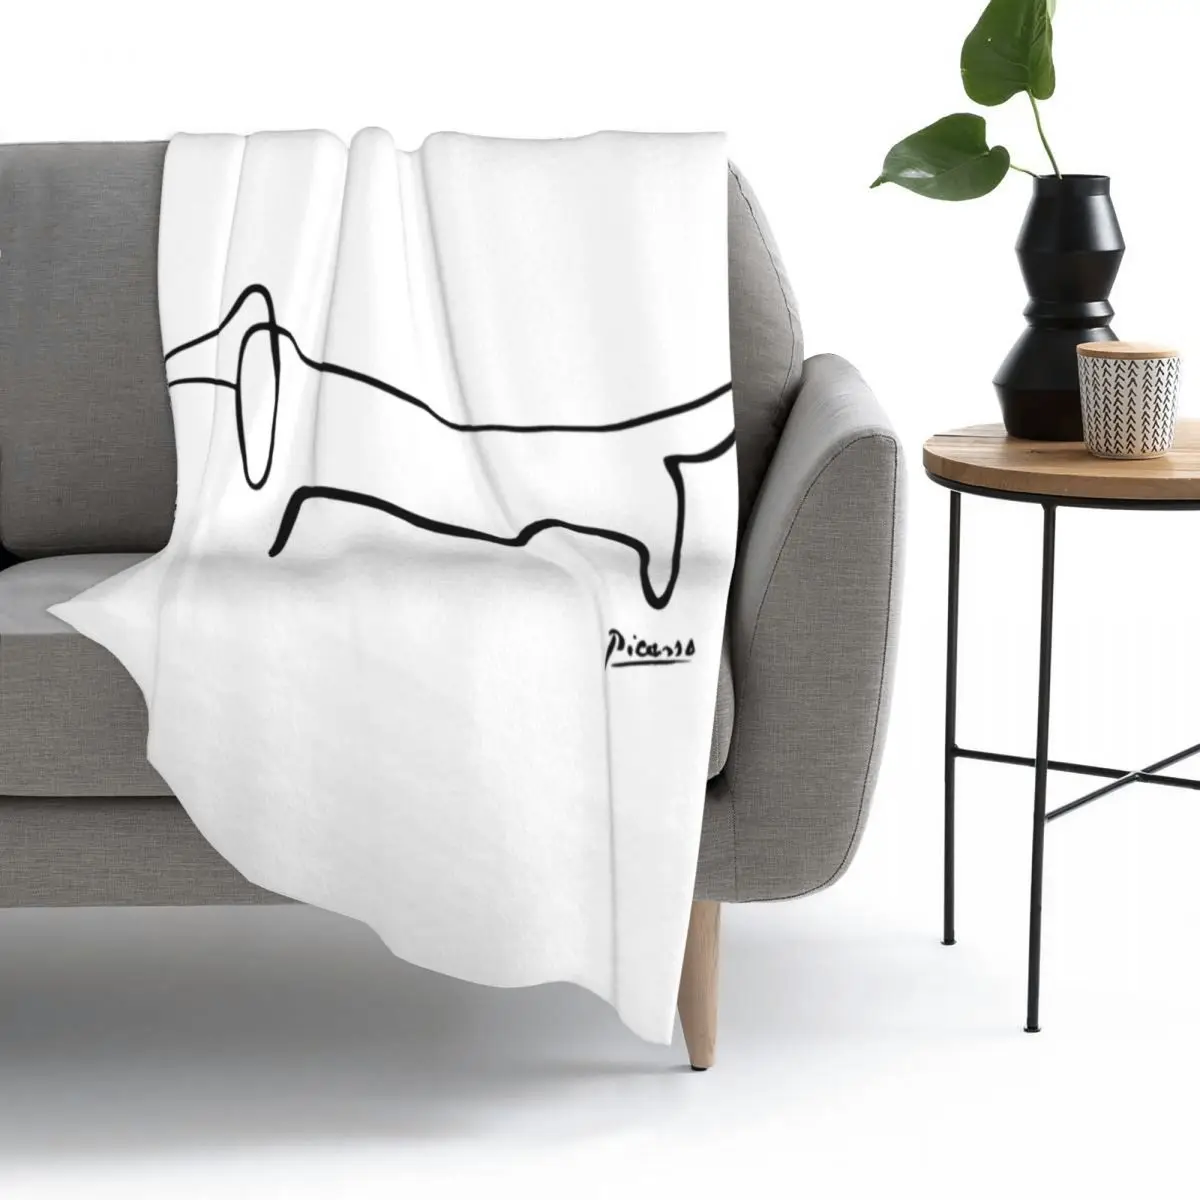 

Pablo Picasso Wild Wiener Dog Dachshund Throw Blanket Sofa blanket Plush Flannel Cozy Thickened double-sided velvet blanket